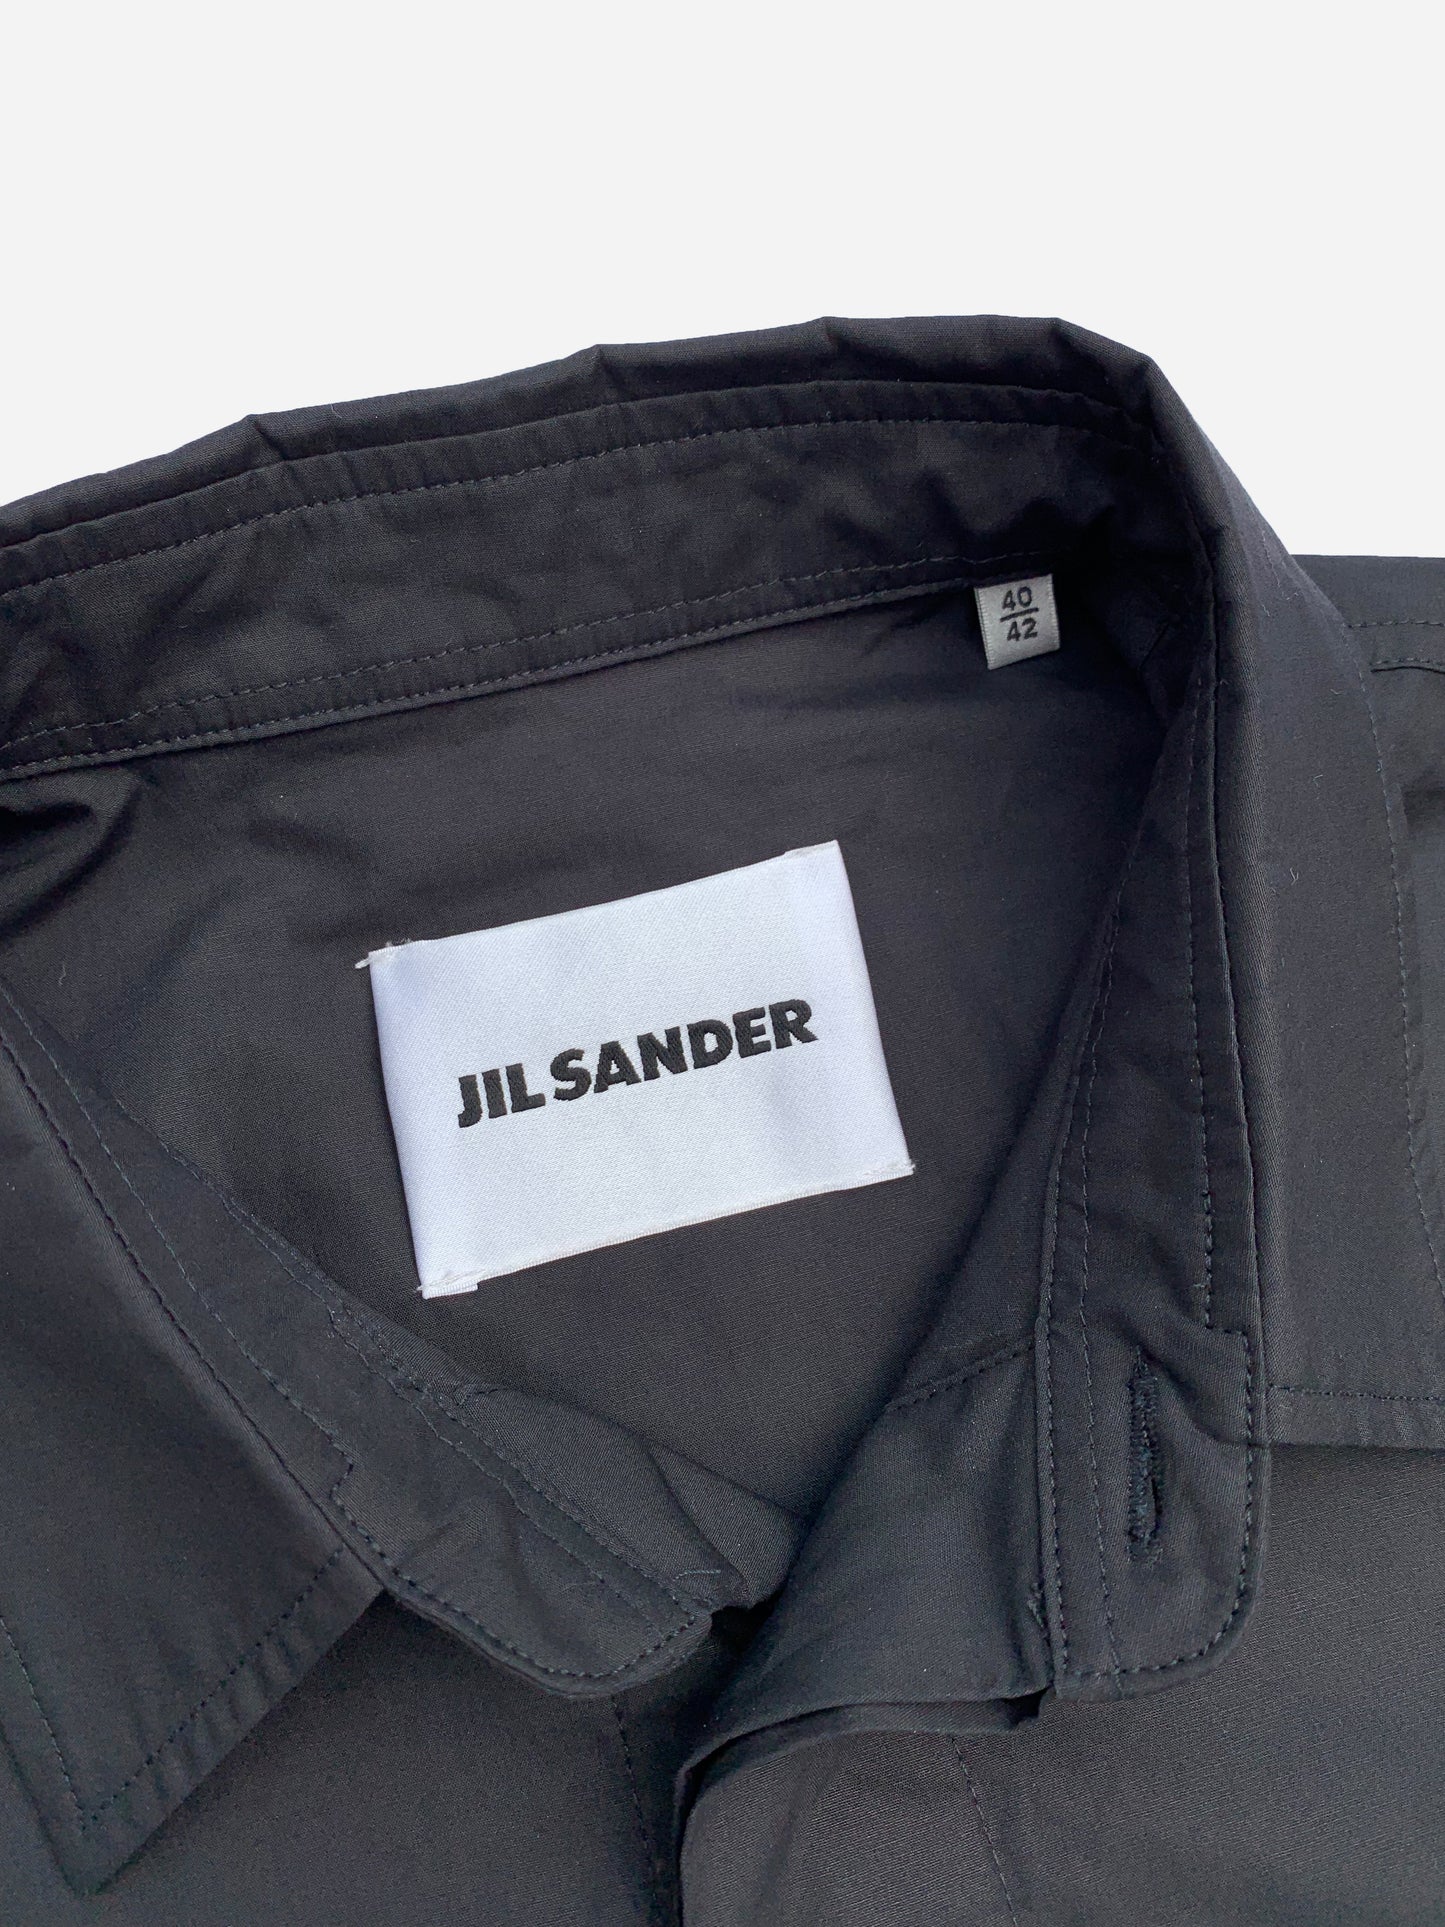 JIL SANDER 'NEVER FADE AWAY' PIN SHIRT. (42 / L)